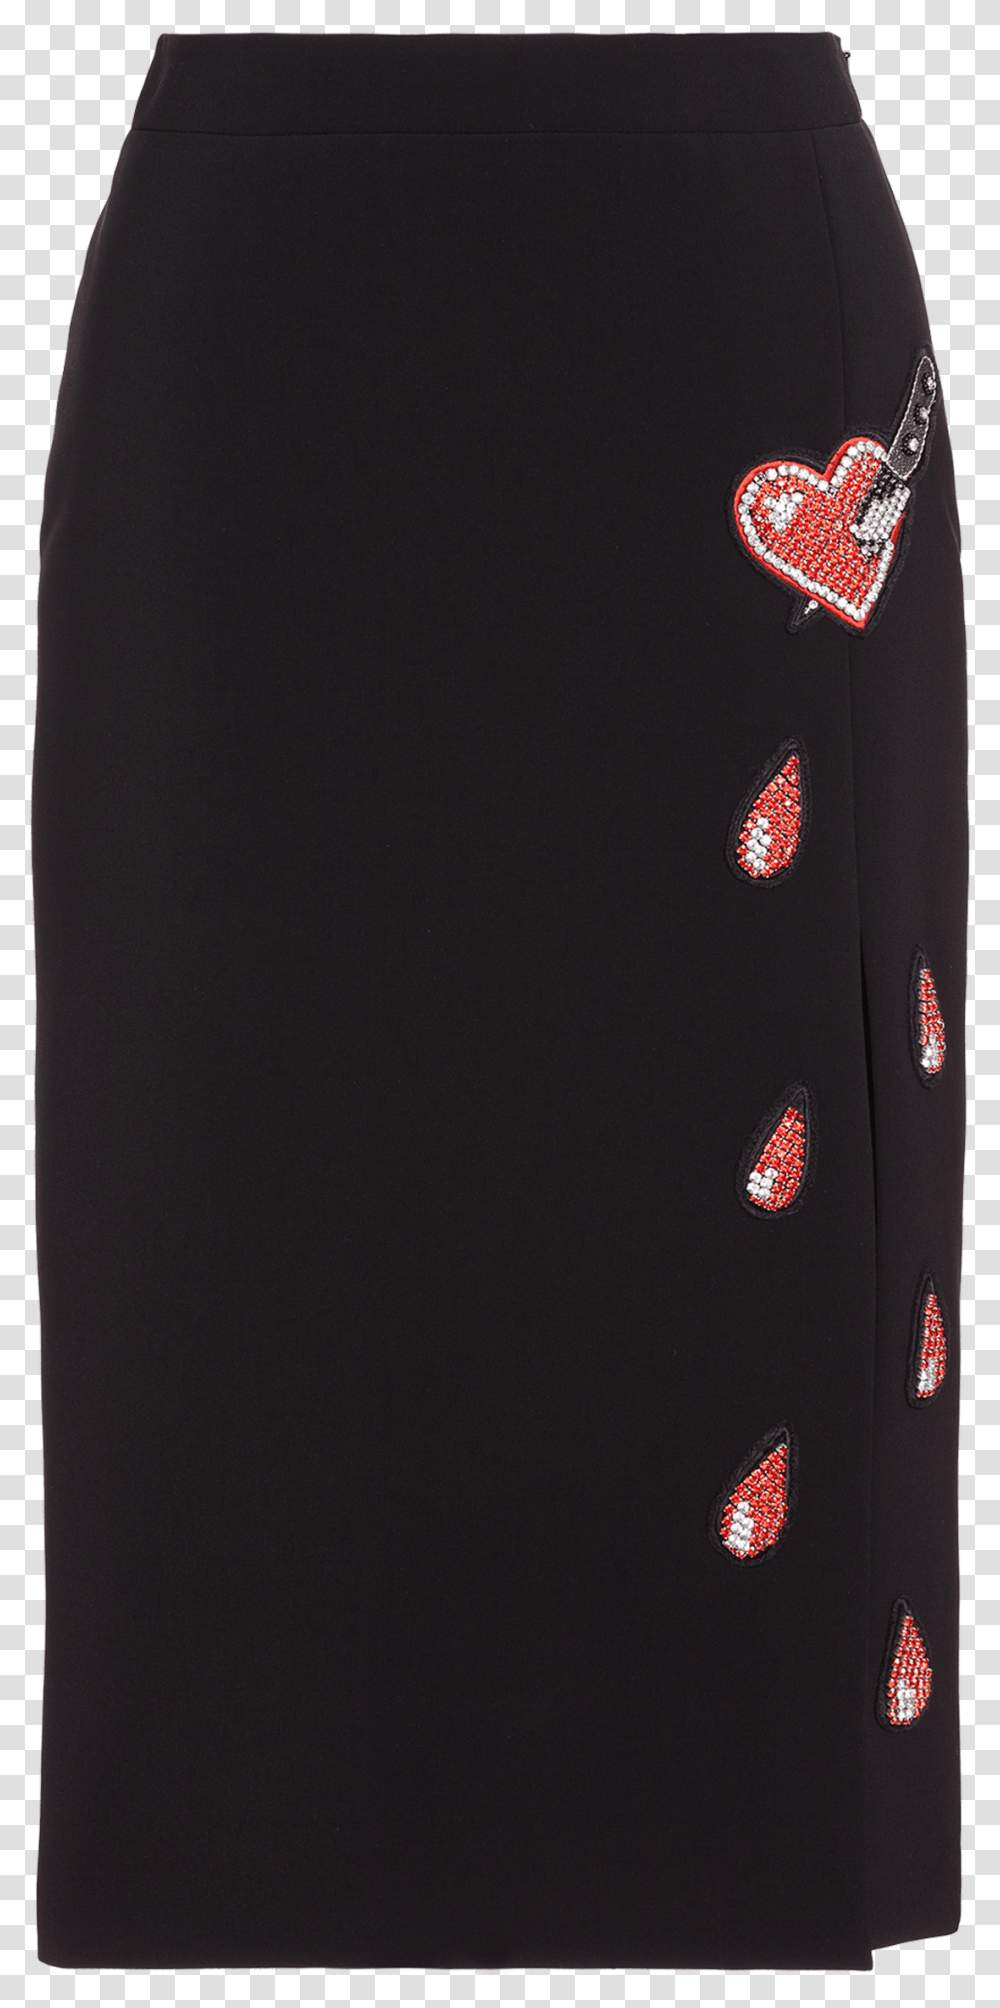 Bleeding Heart Crepe Skirt Pencil Skirt, File Binder, File Folder, Clothing, Apparel Transparent Png